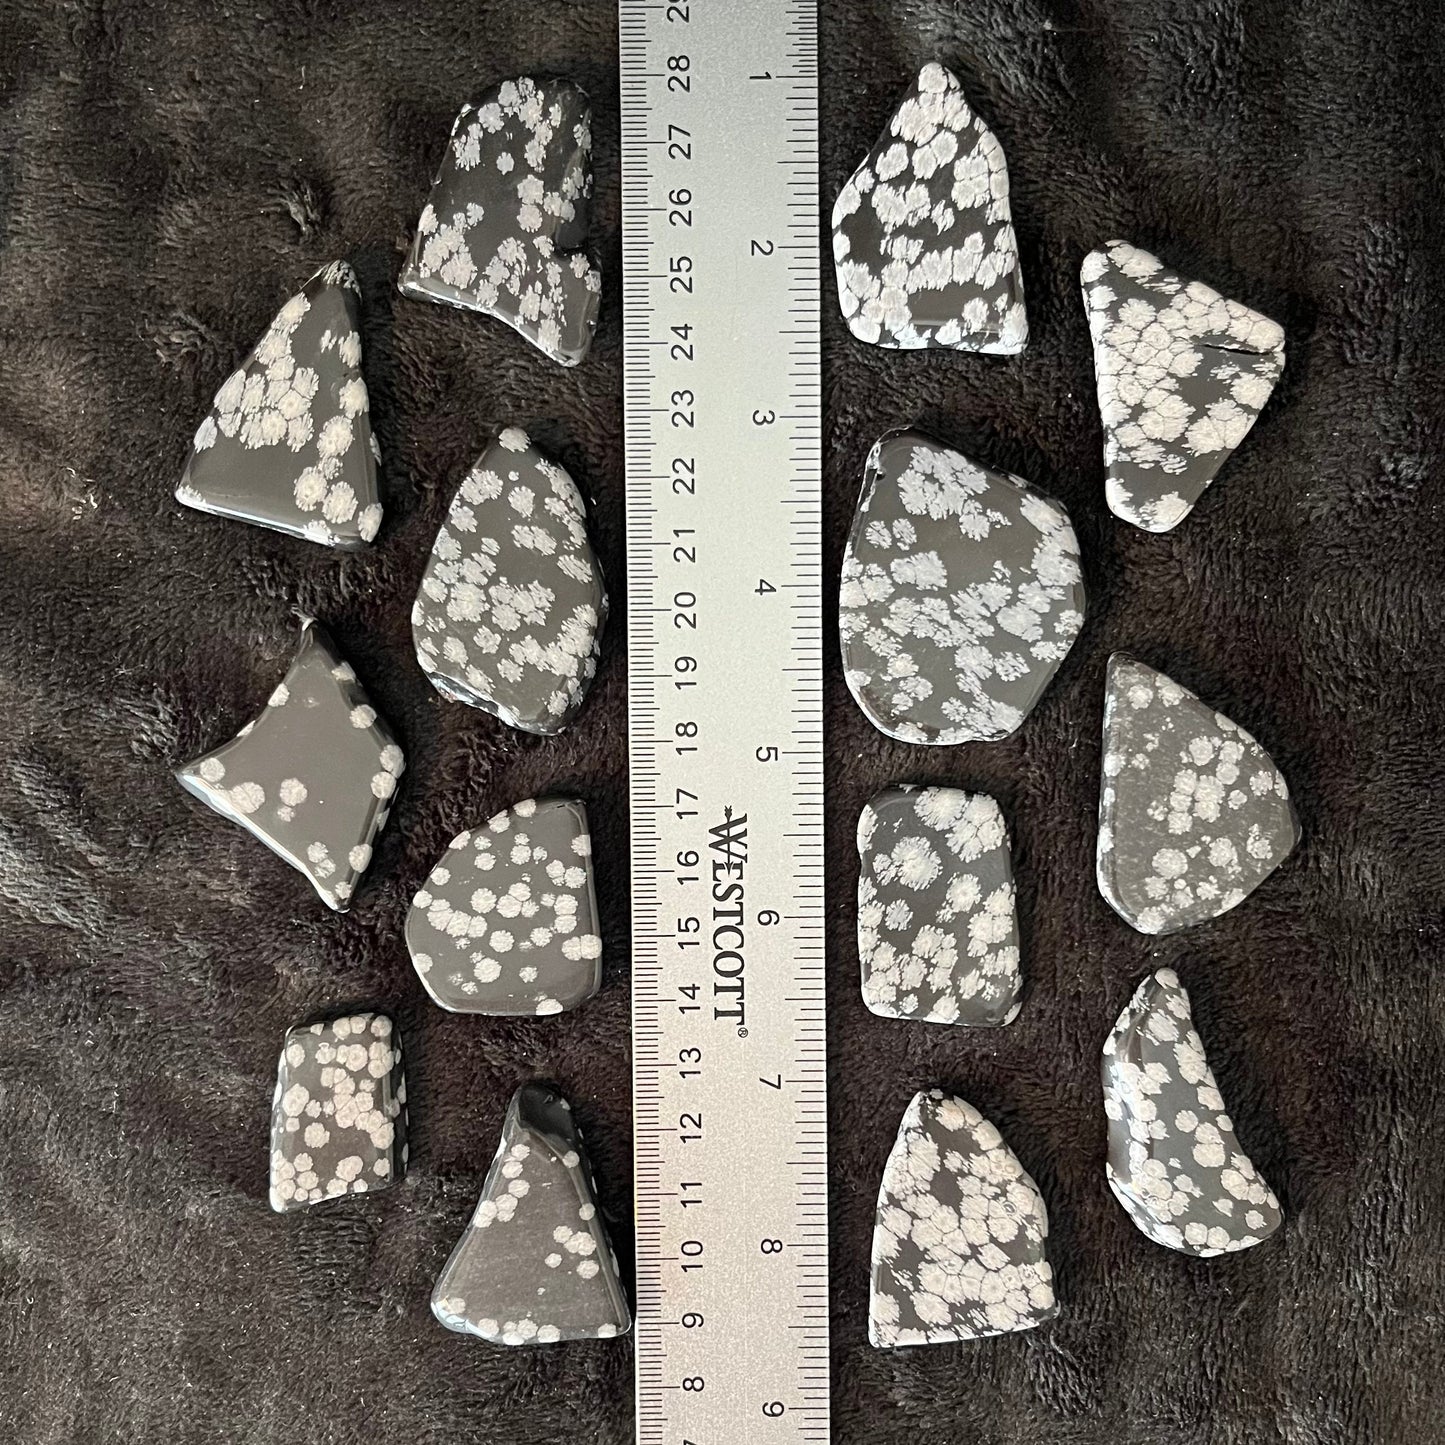 Snowflake Obsidian Tumbled Slice (Utah) (Approx. 1 1/2” - 1 3/4”) BIN-0